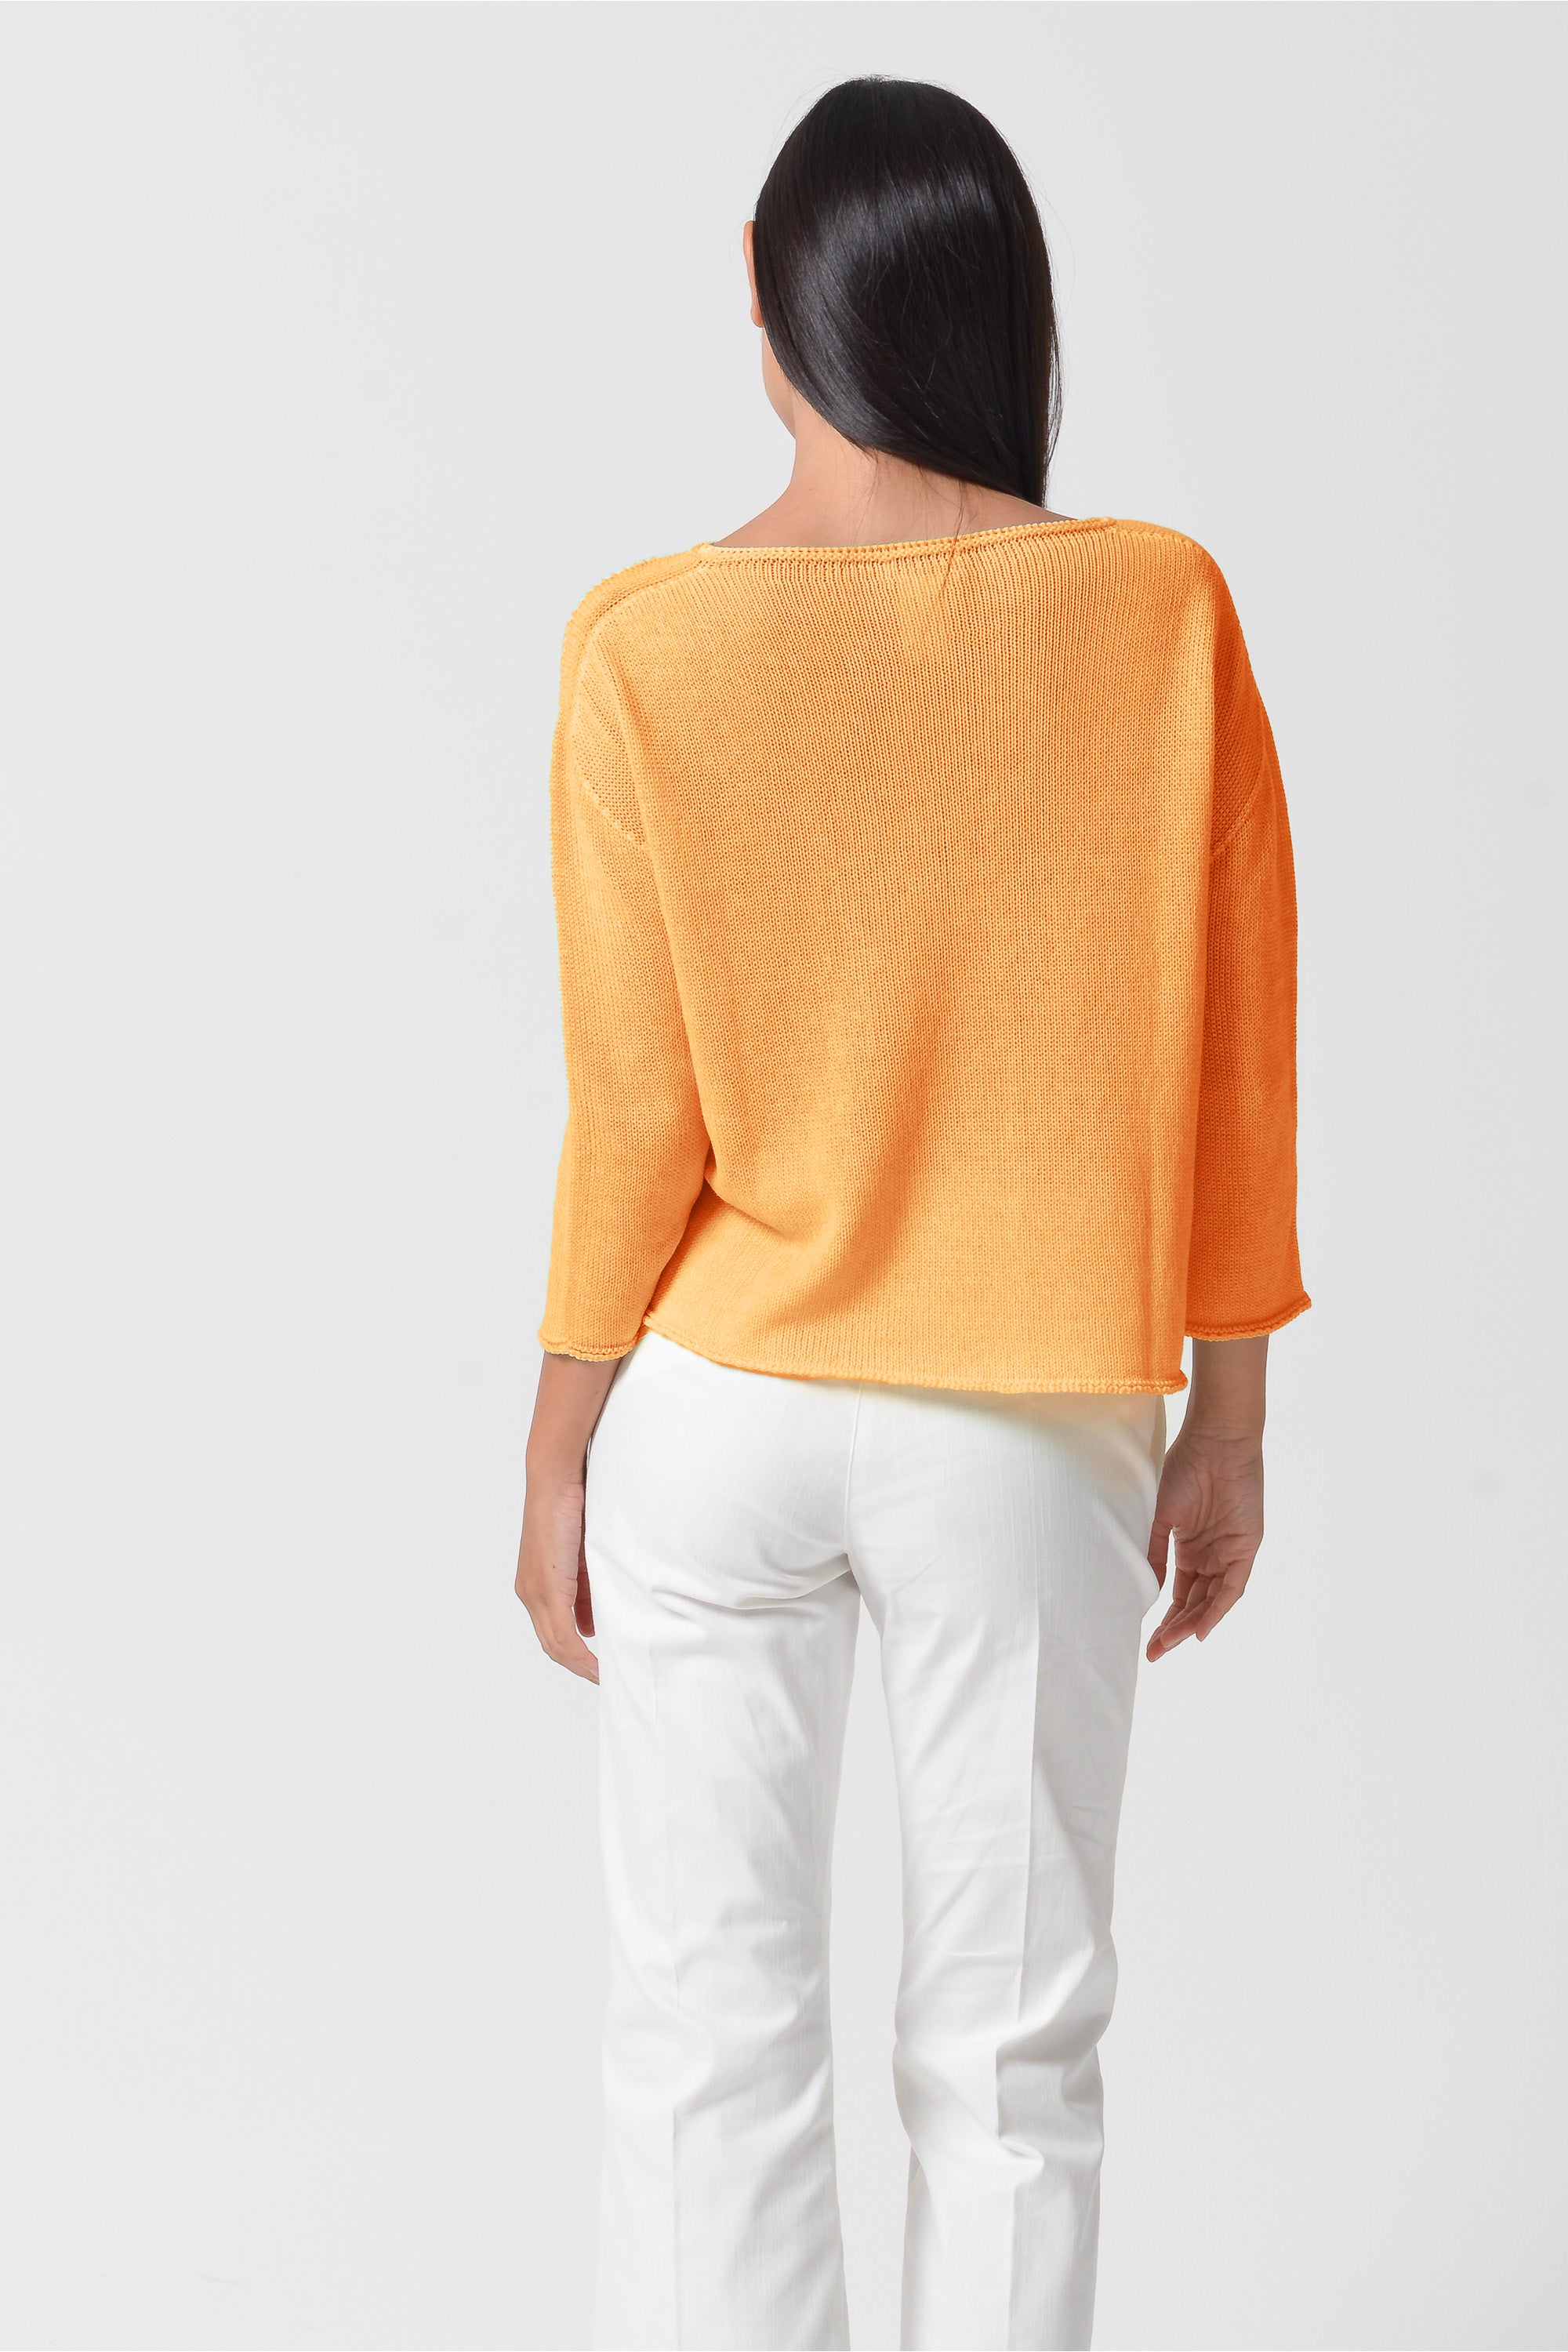 Sofia Knit - Short Sleeve Cotton Sweater - Apricot